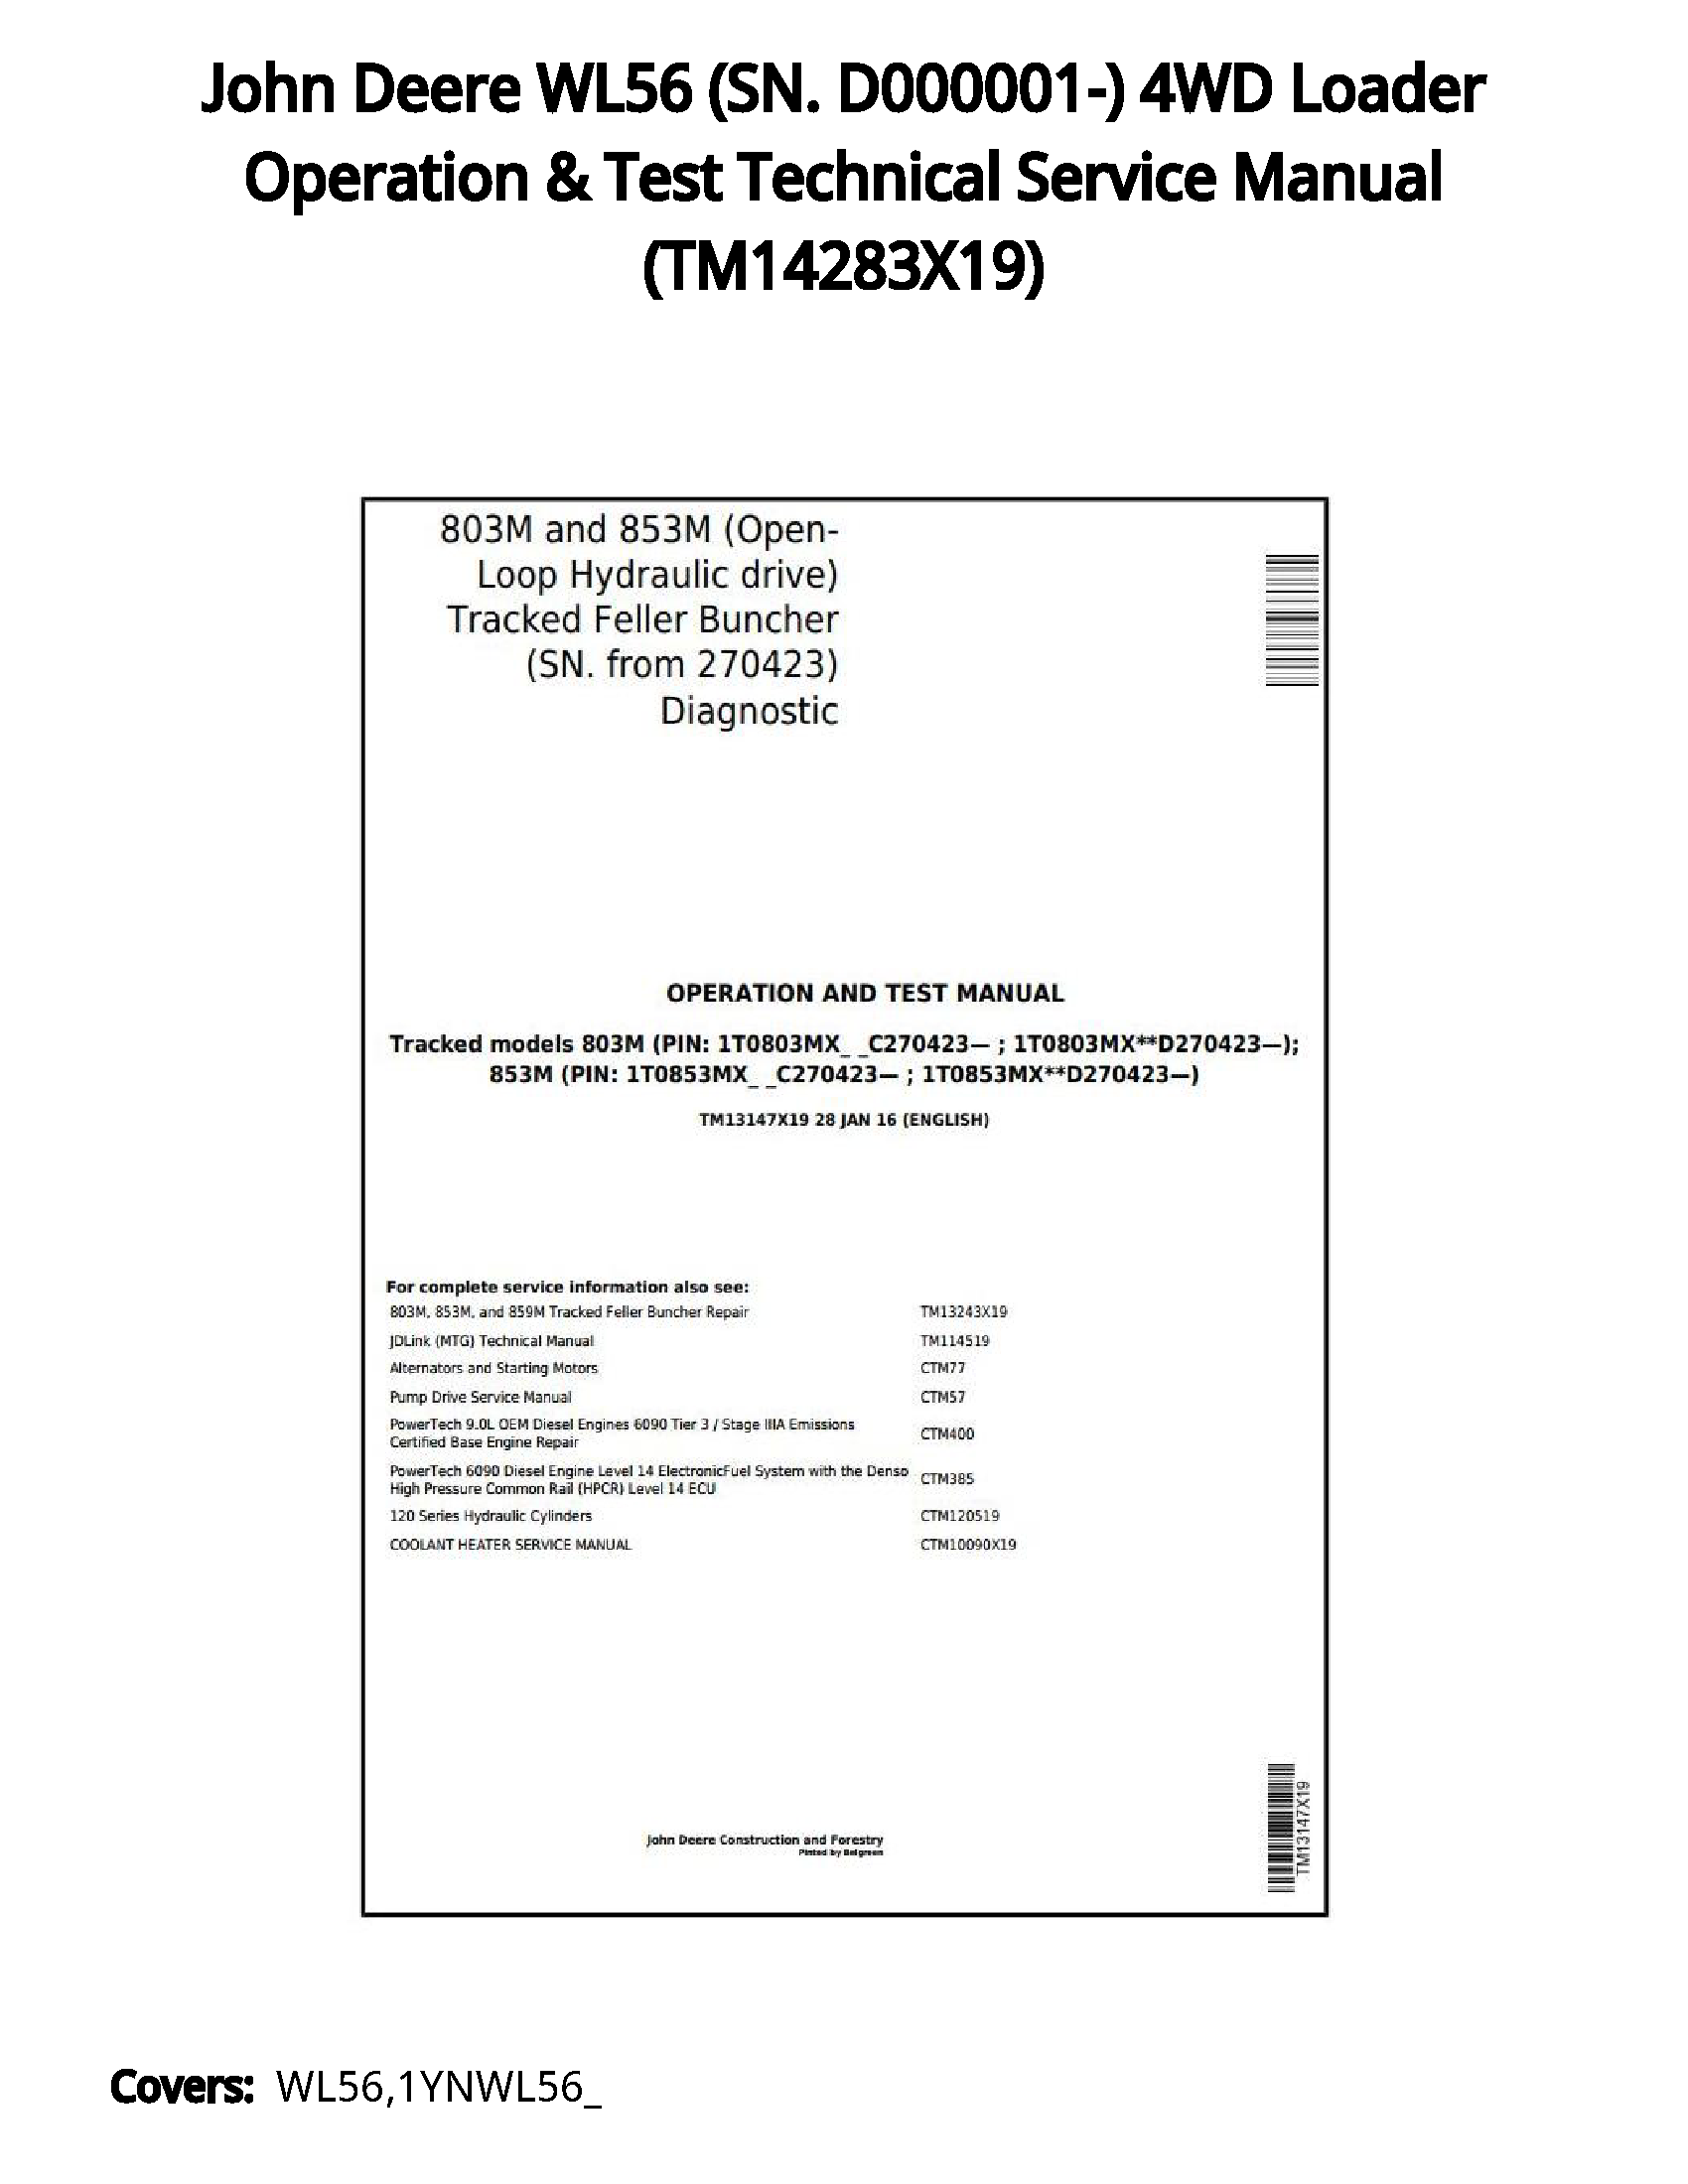 John Deere WL56 (SN. D000001-) 4WD Loader Operation & Test Technical Service Manual - TM14283X19